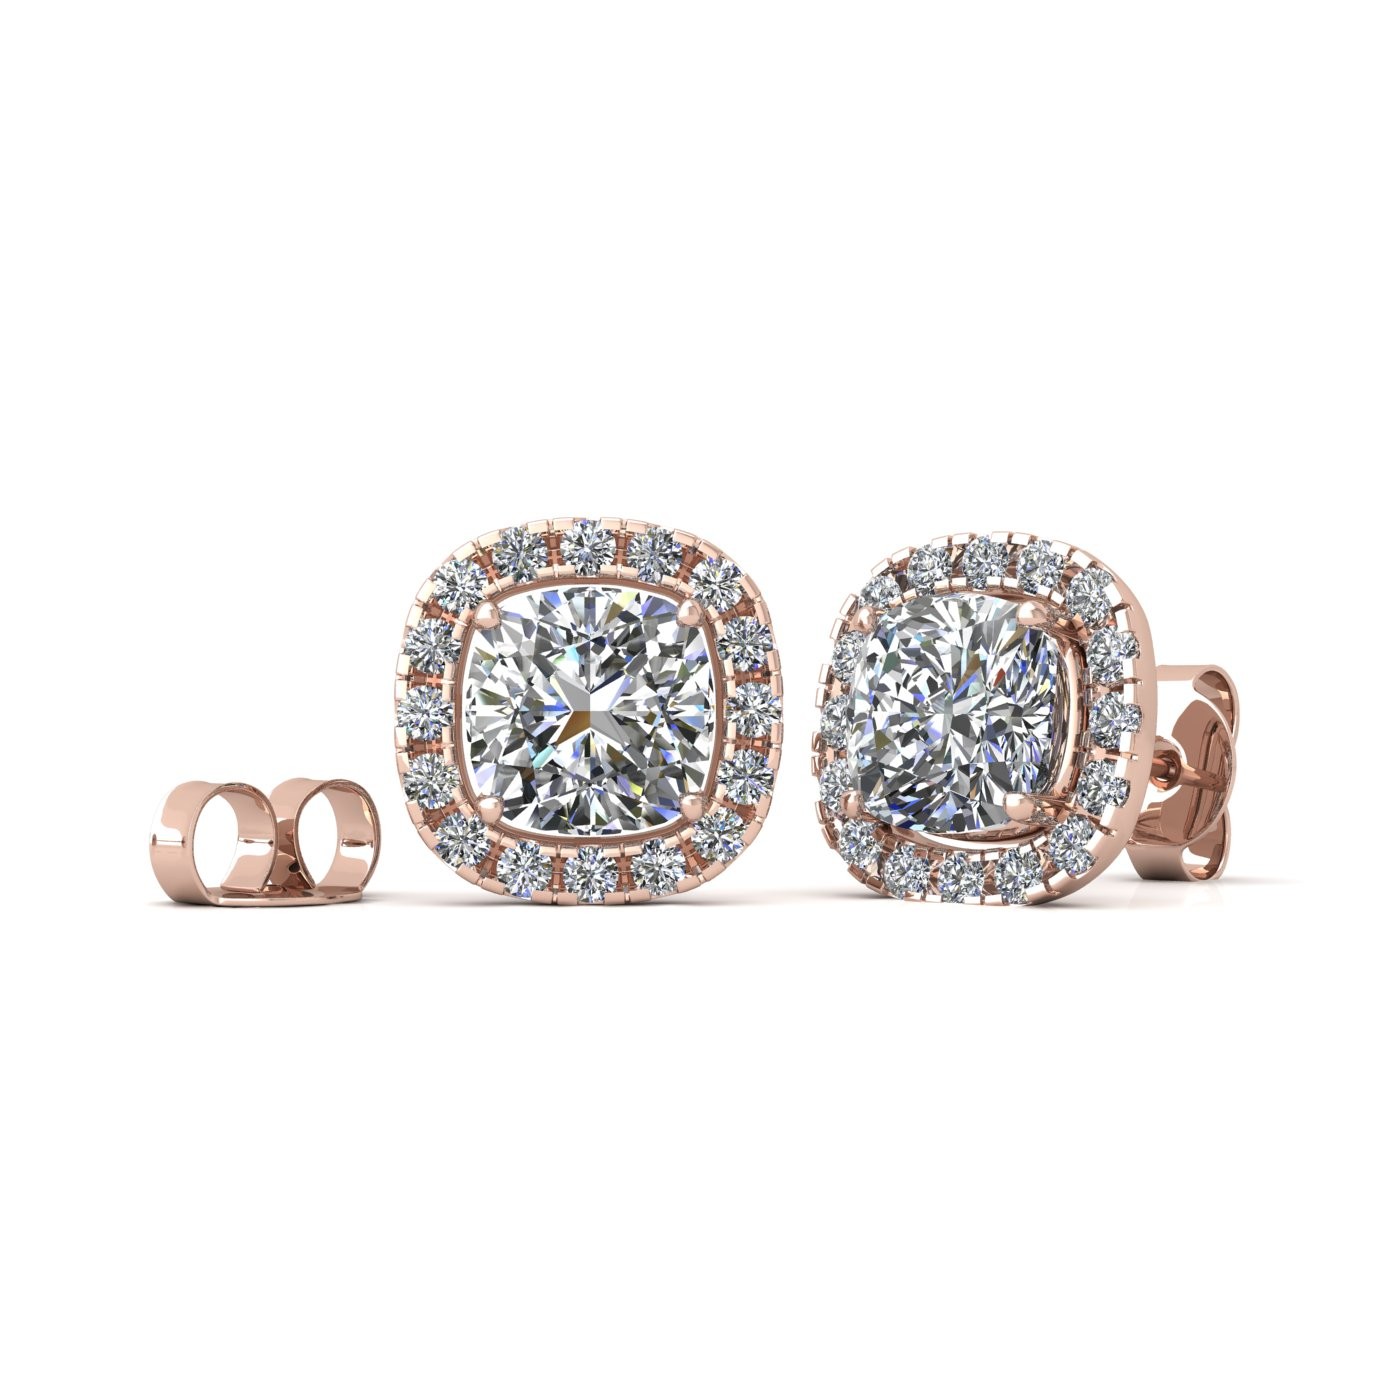 18k rose gold  1,5 ct each (3,0 tcw) 4 prongs cushion shape diamond earrings with diamond pavÉ set halo Photos & images